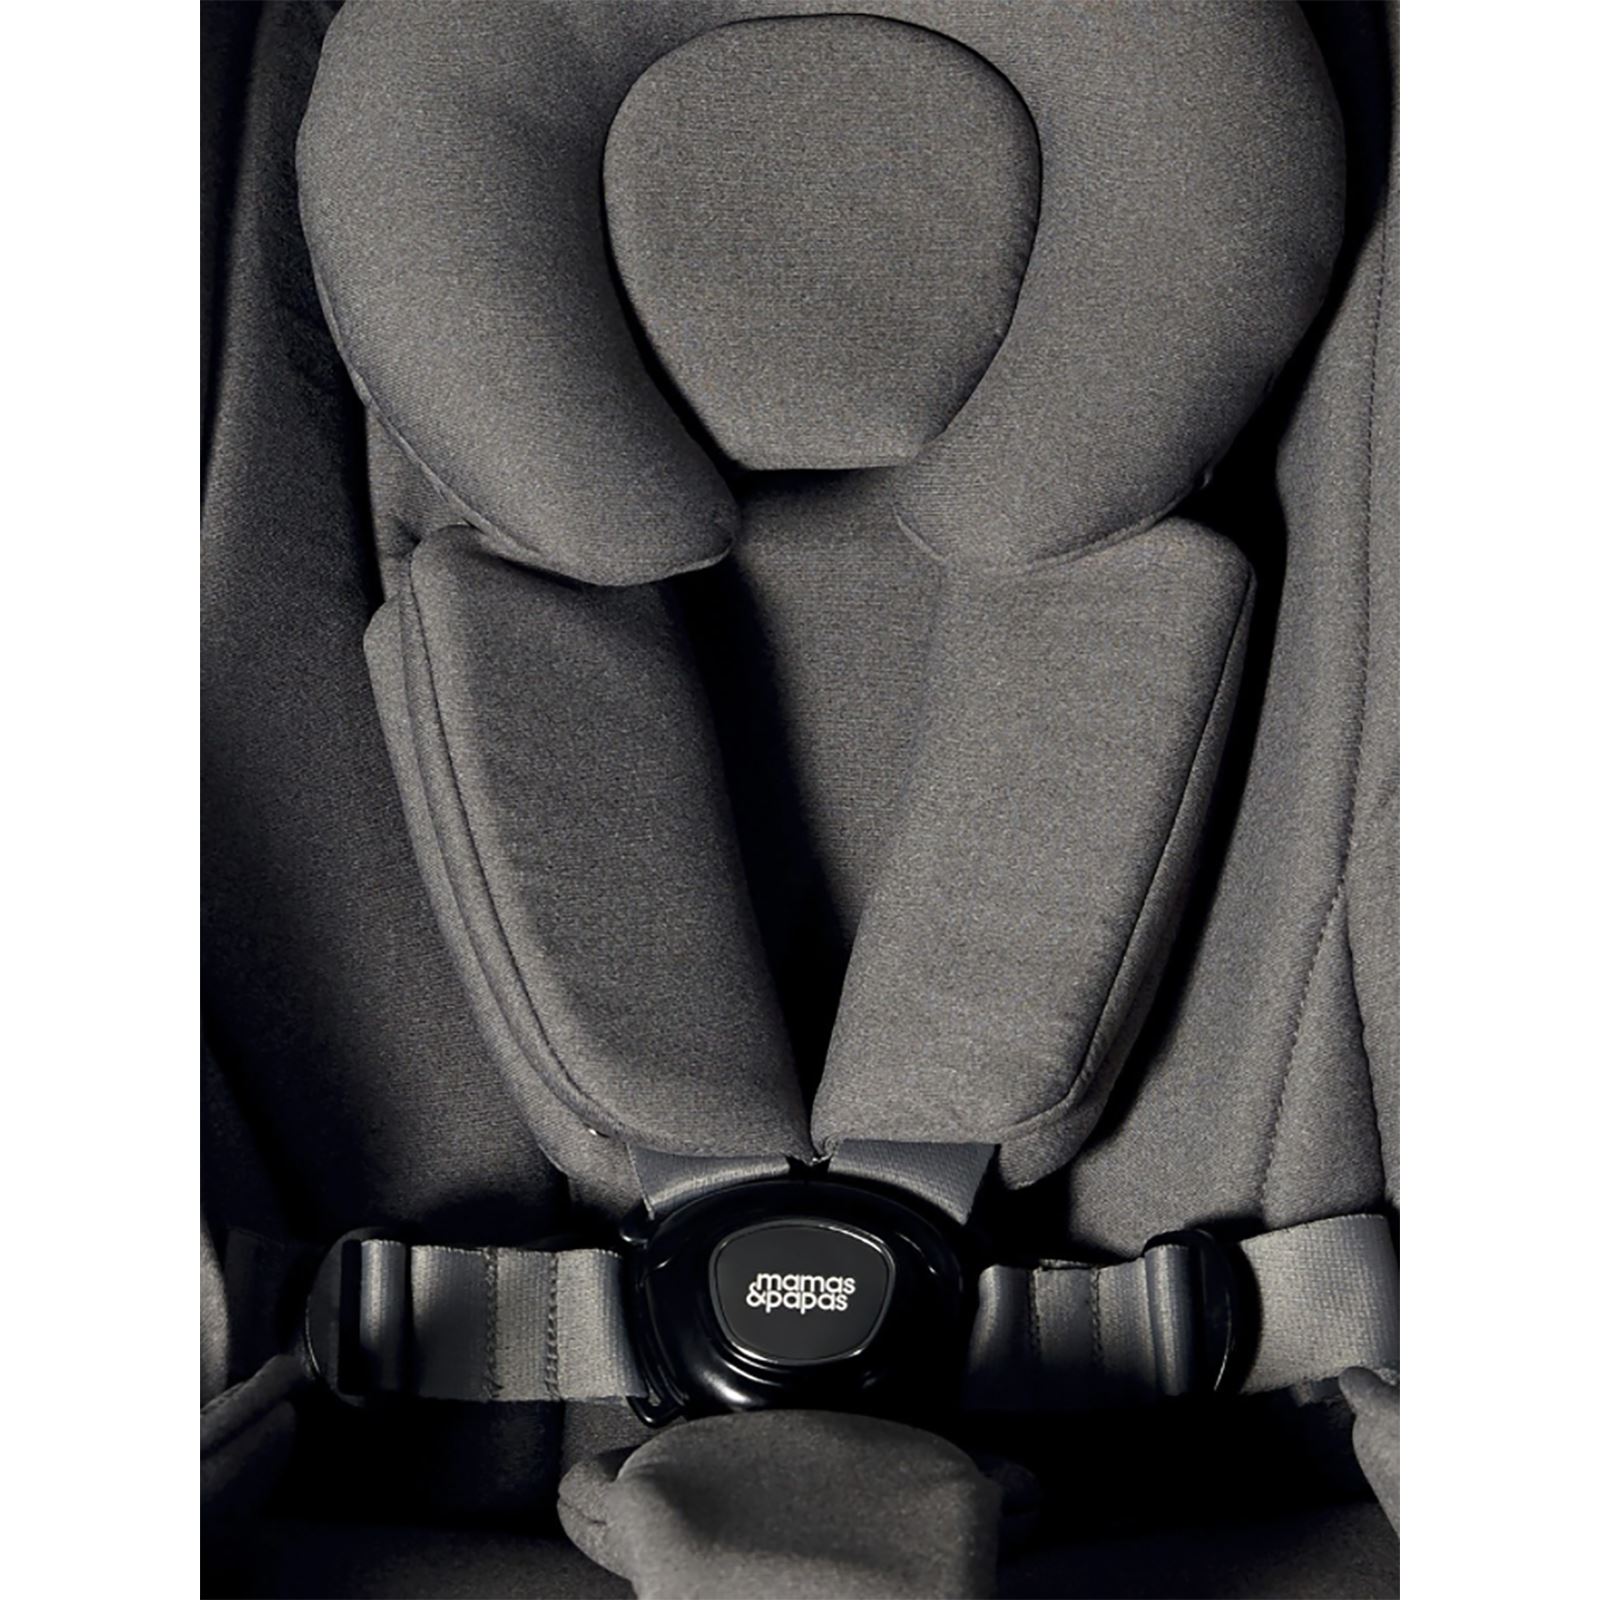 Mamas Papas Ocarro Bebek Arabası / Grey Mist